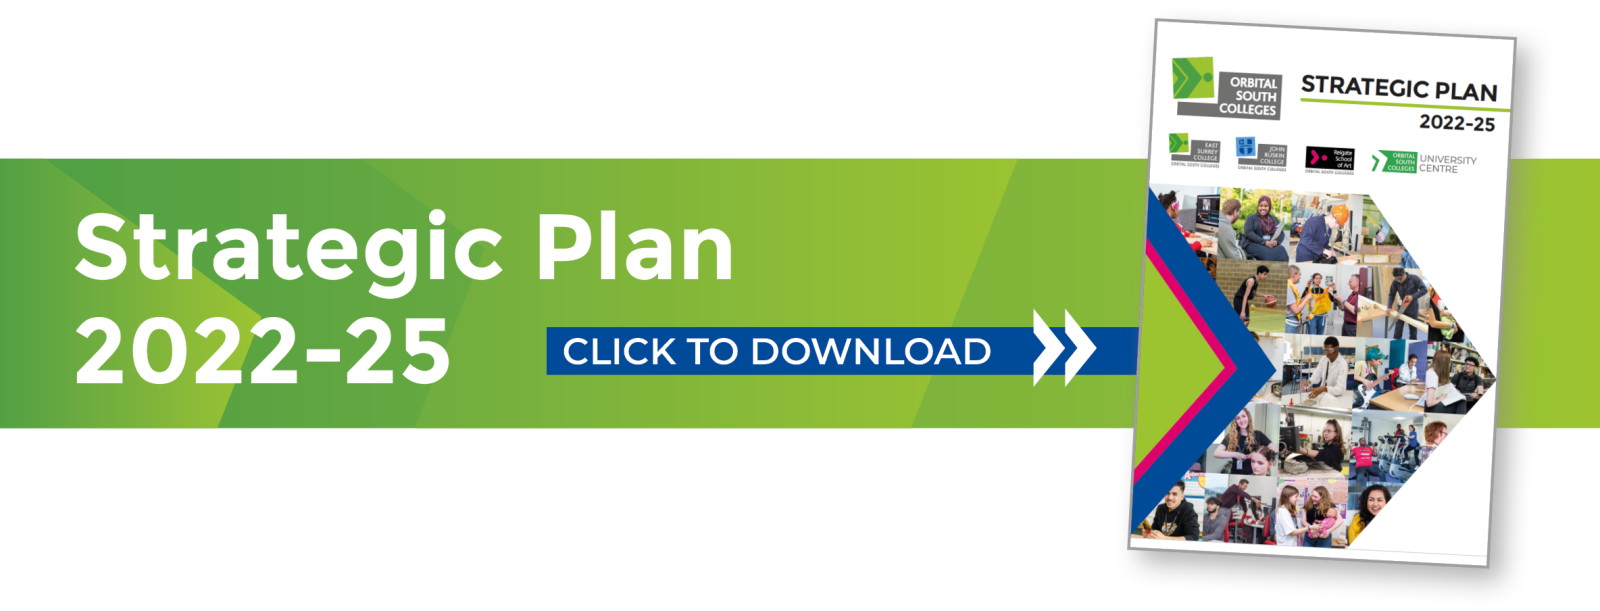 strategic_plan_download_button